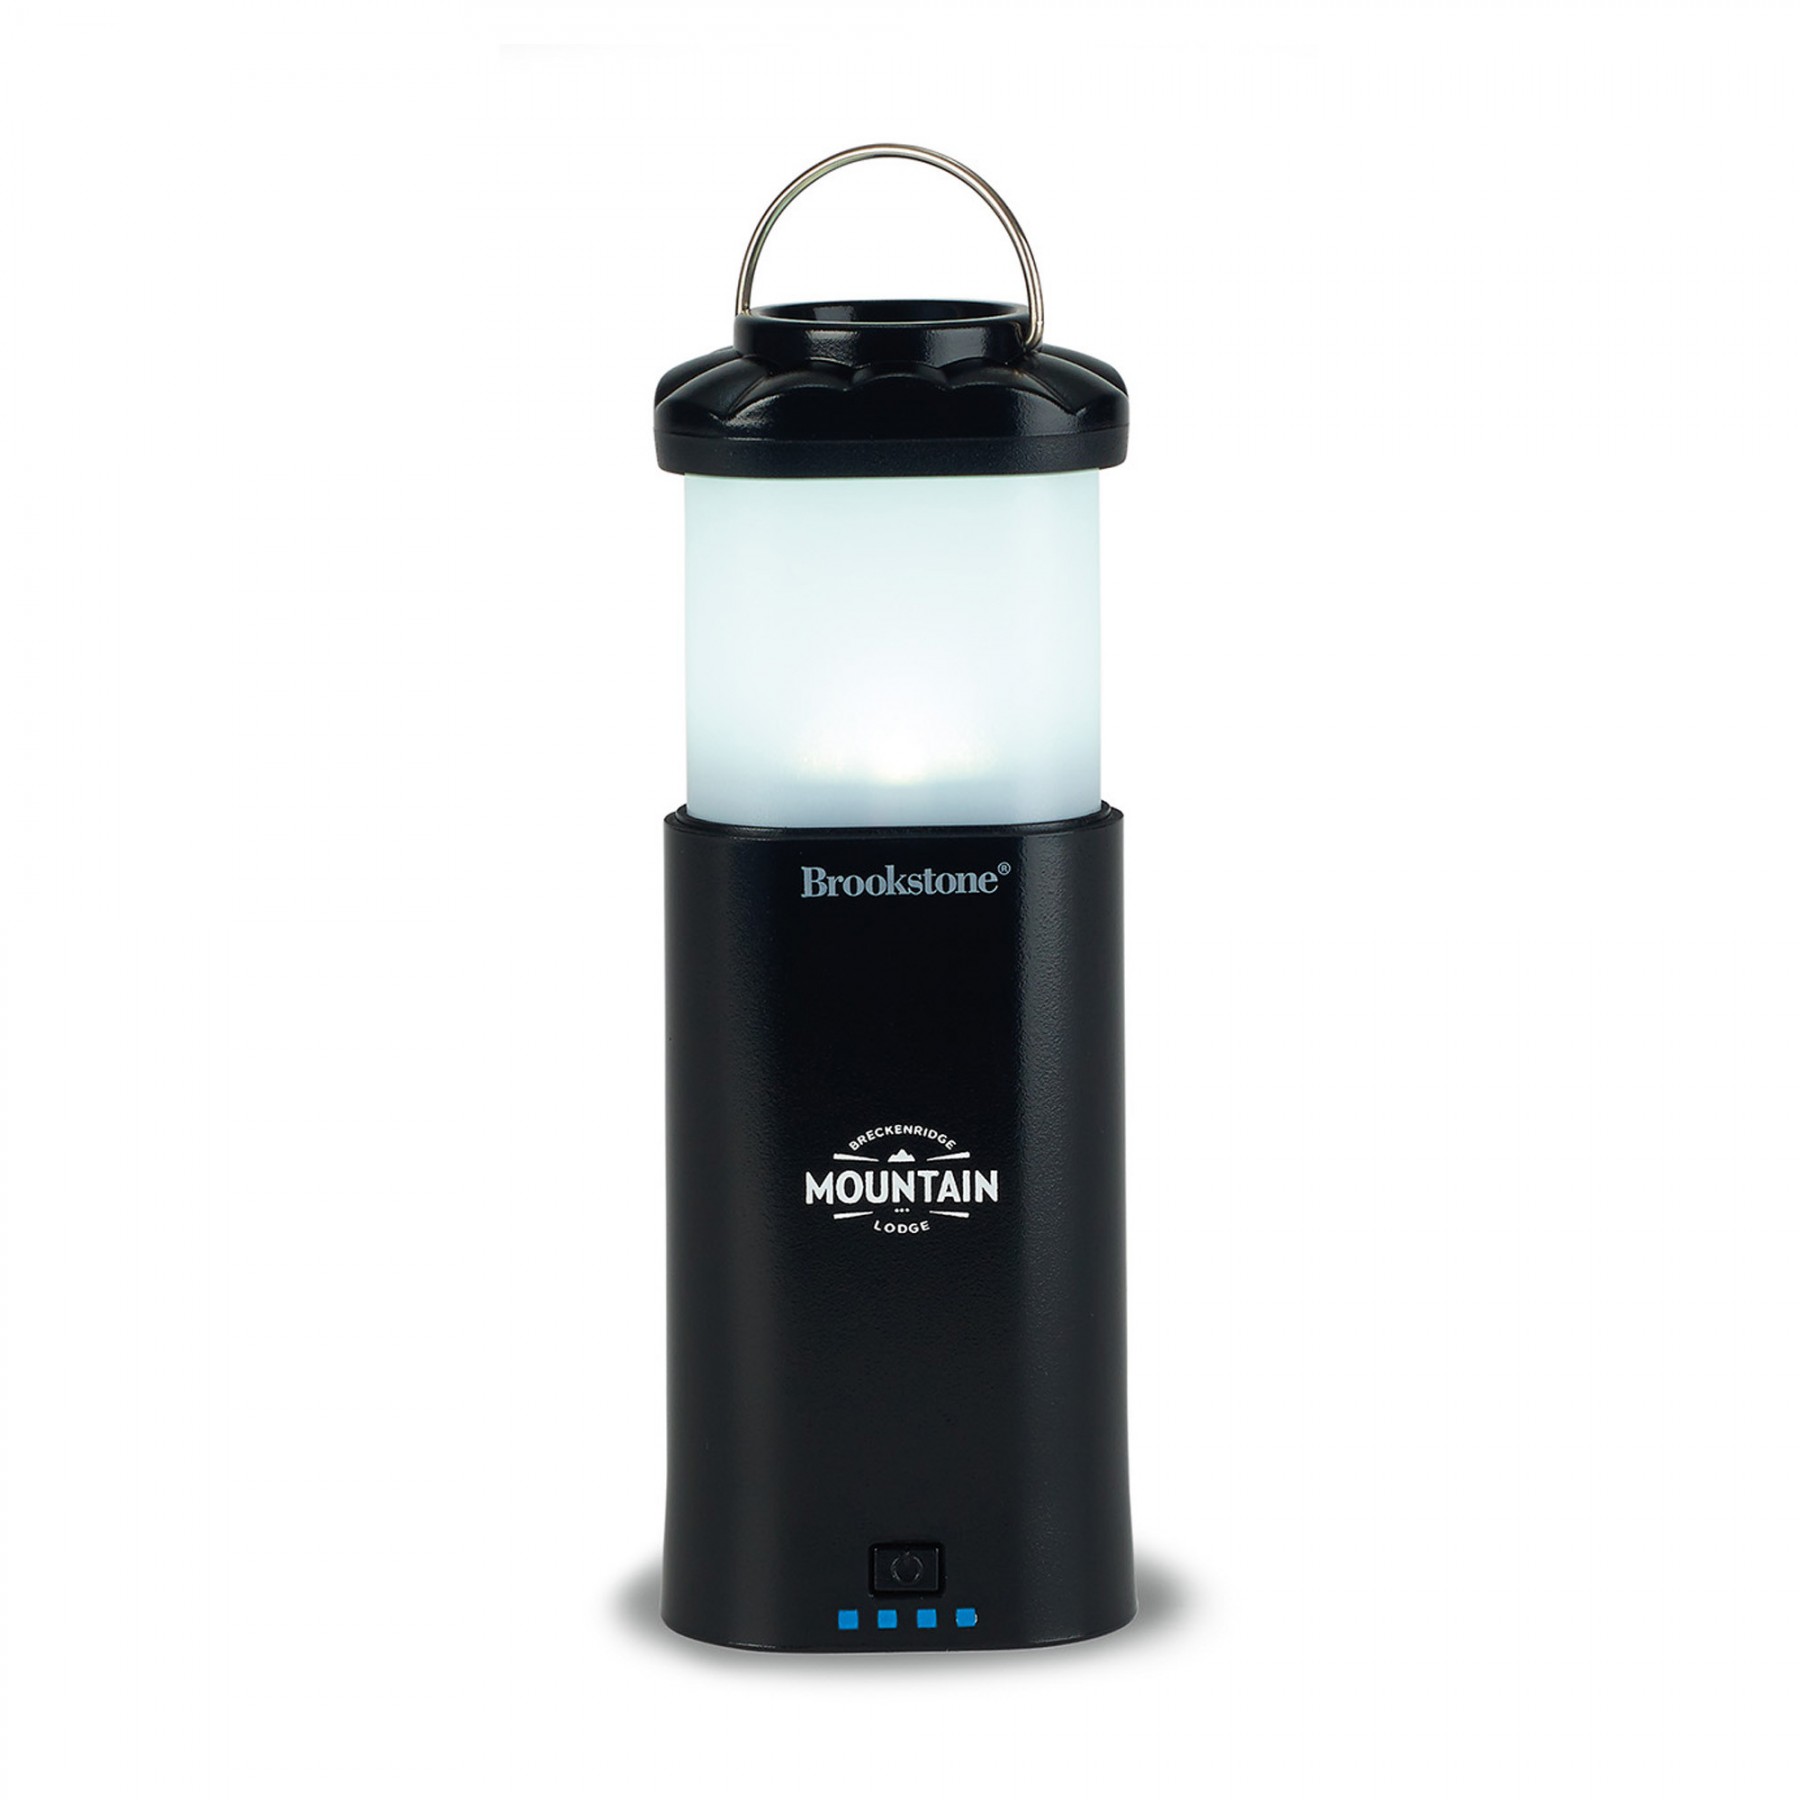 Brookstone Power Bank Lantern w/ Flashlight - 7800 mAh